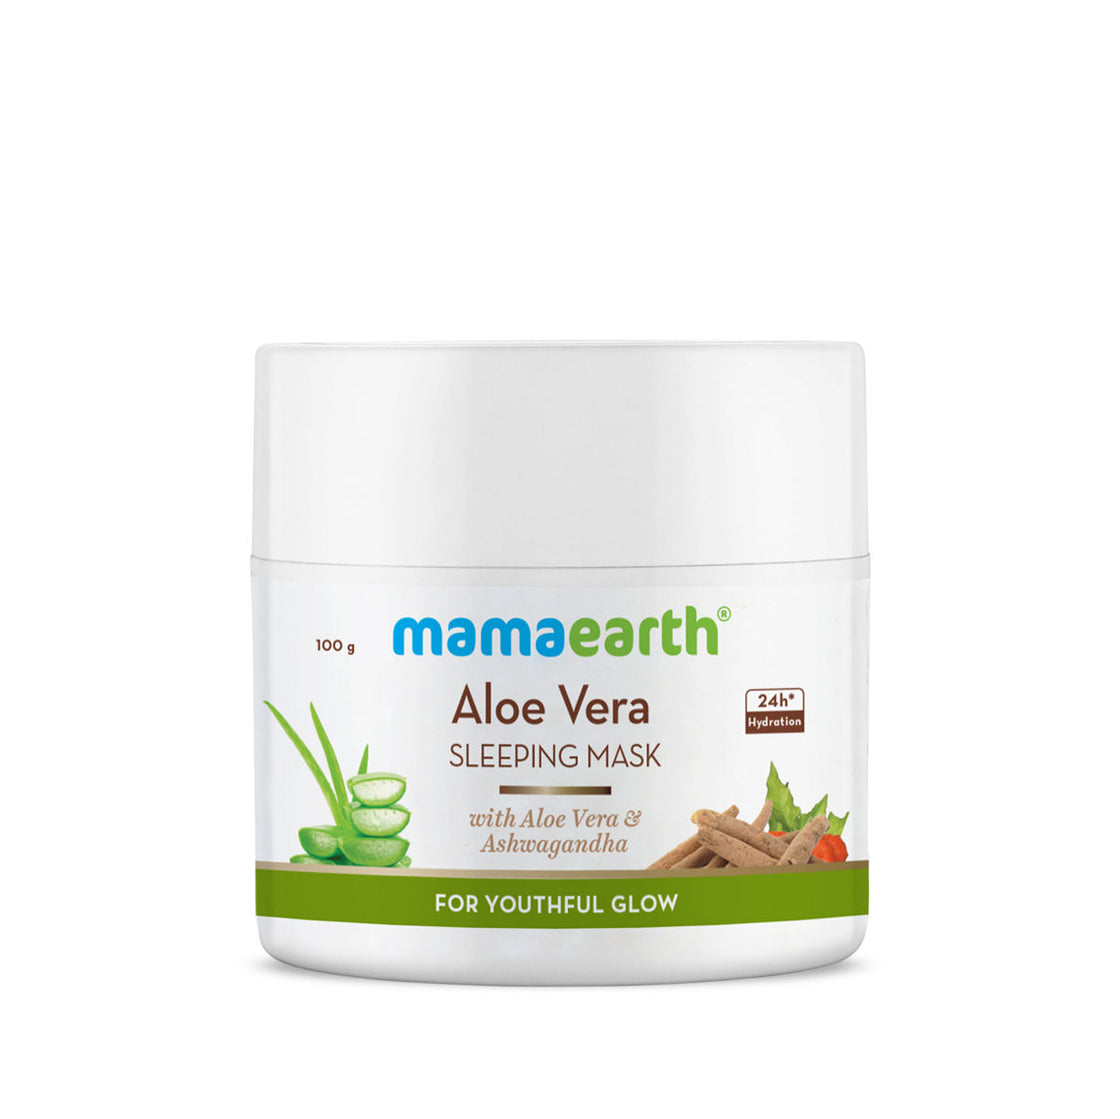 Mamaearth Aloe Vera Sleeping Mask,Night Cream, With Aloe Vera & Ashwagandha For A Youthful Glow